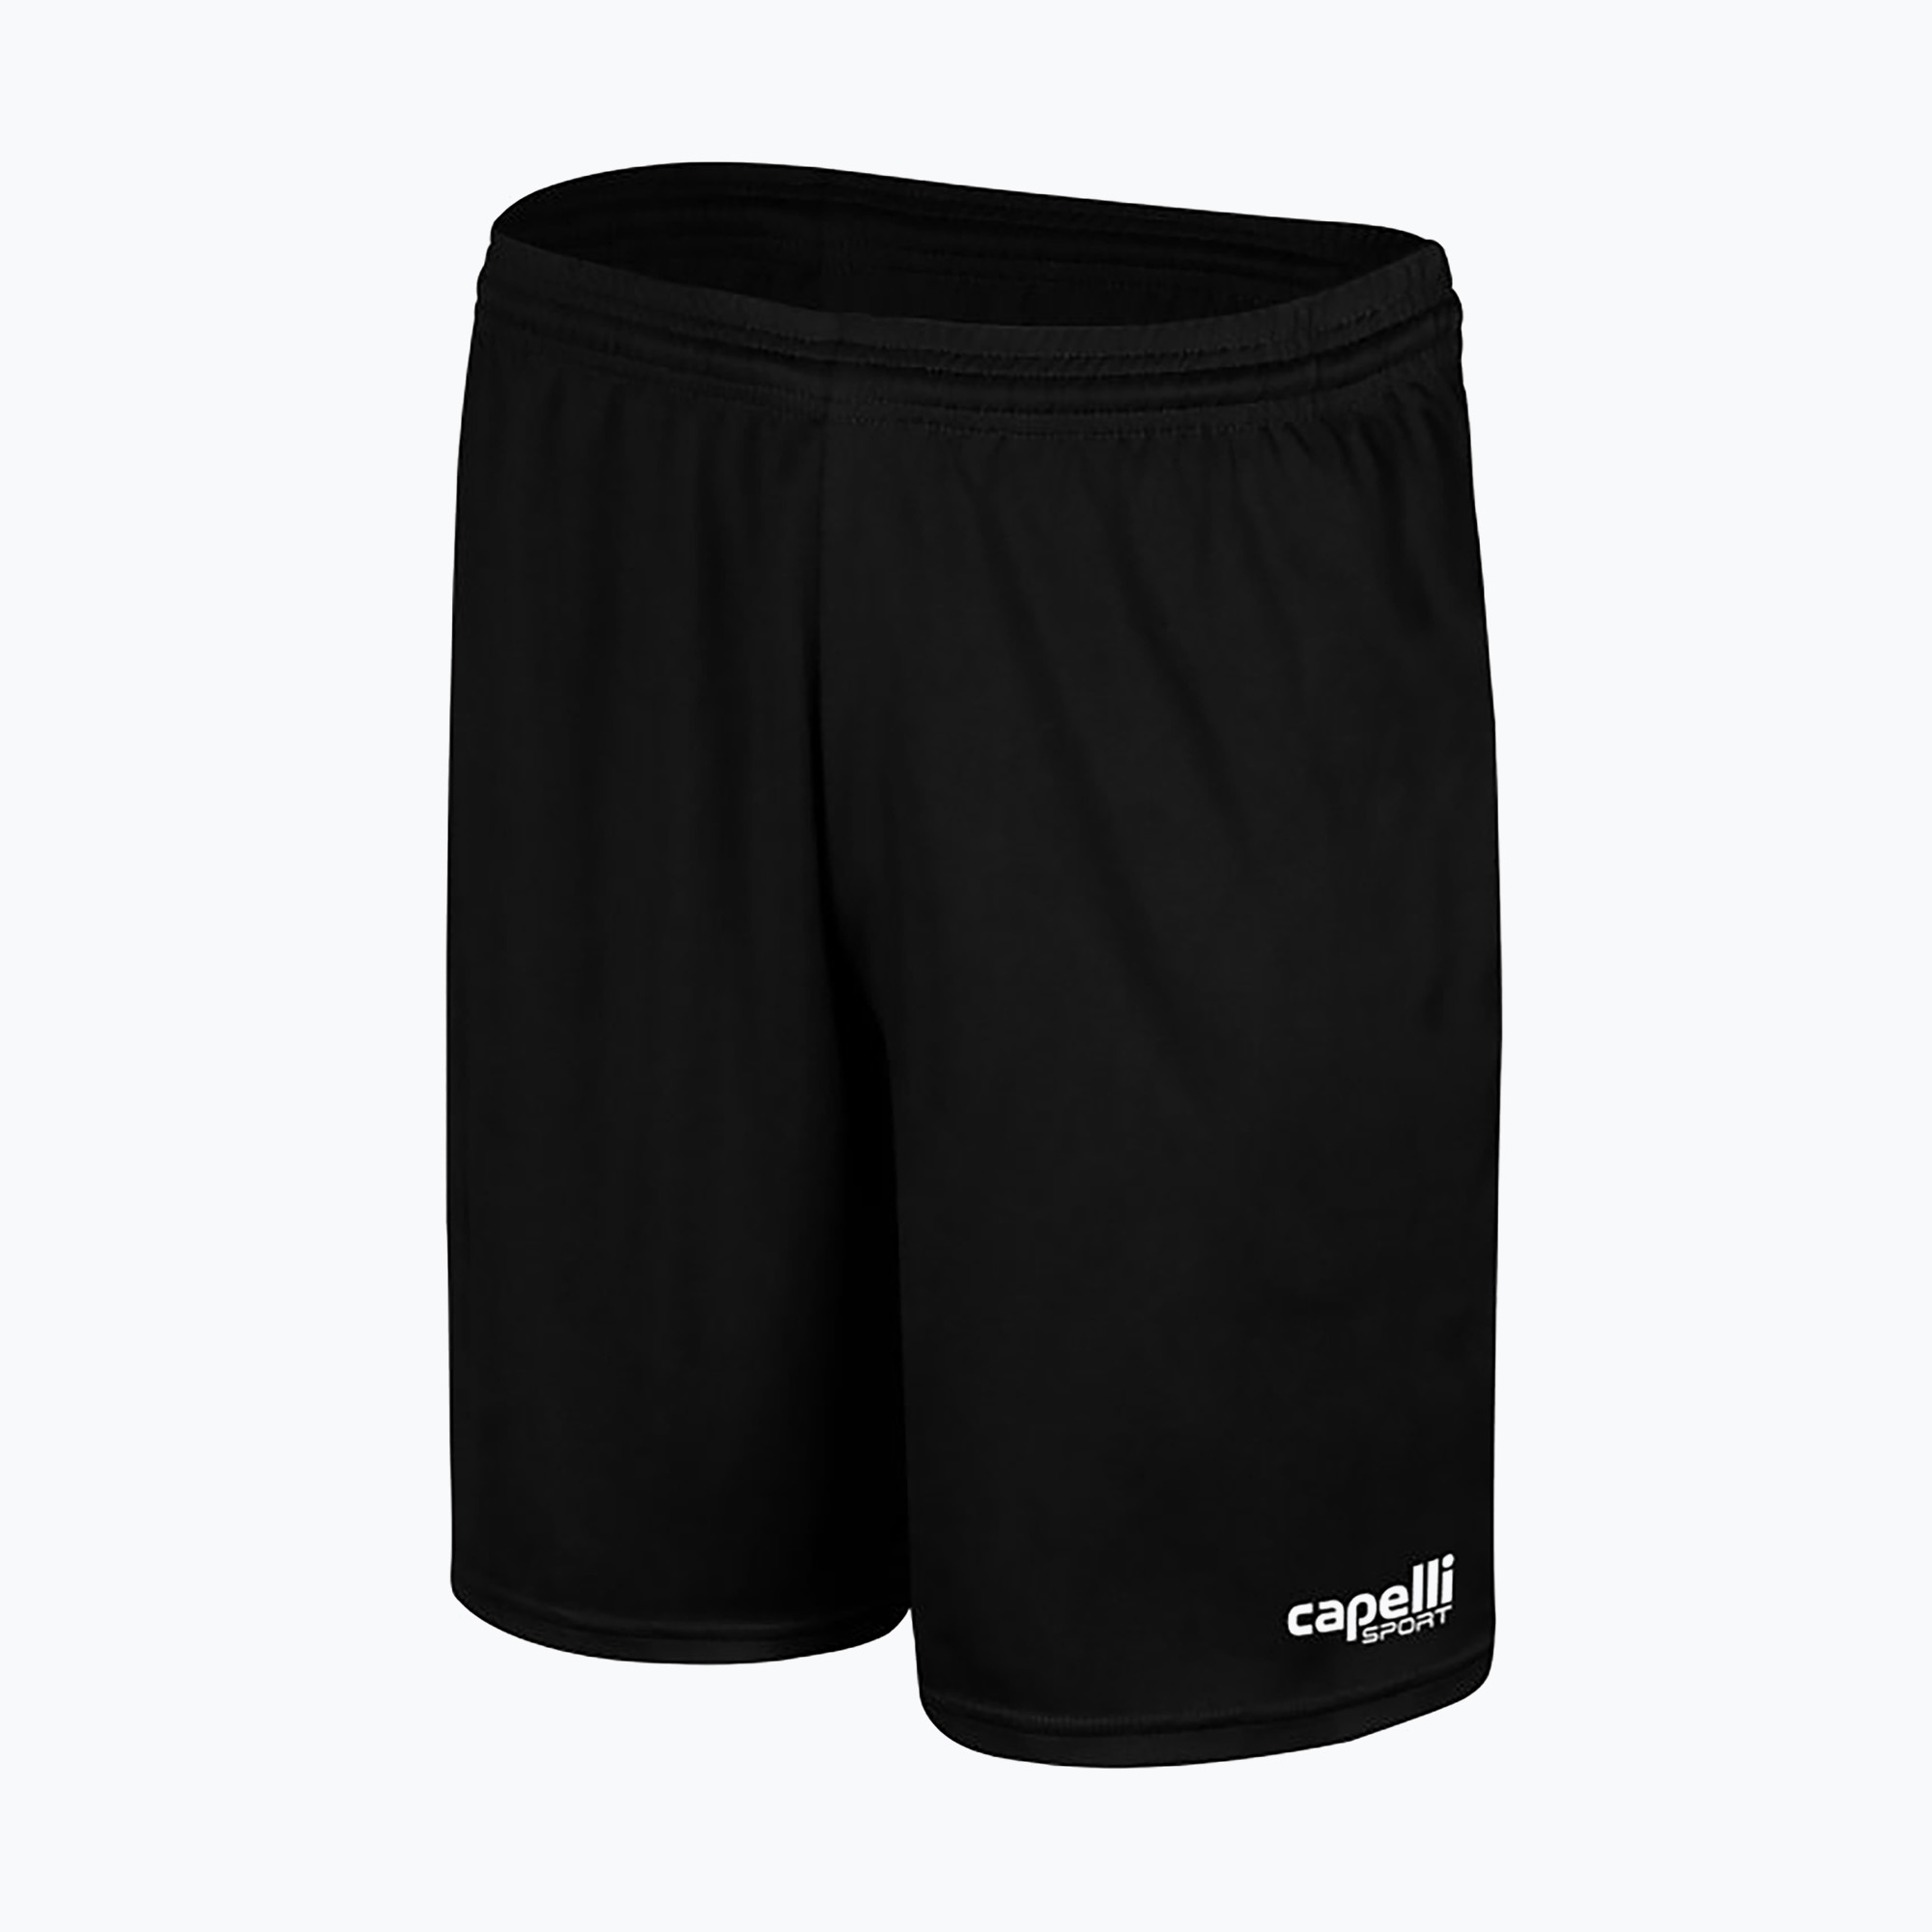 Capelli Cs One Youth Knit Goalkeeper shorts negru/alb